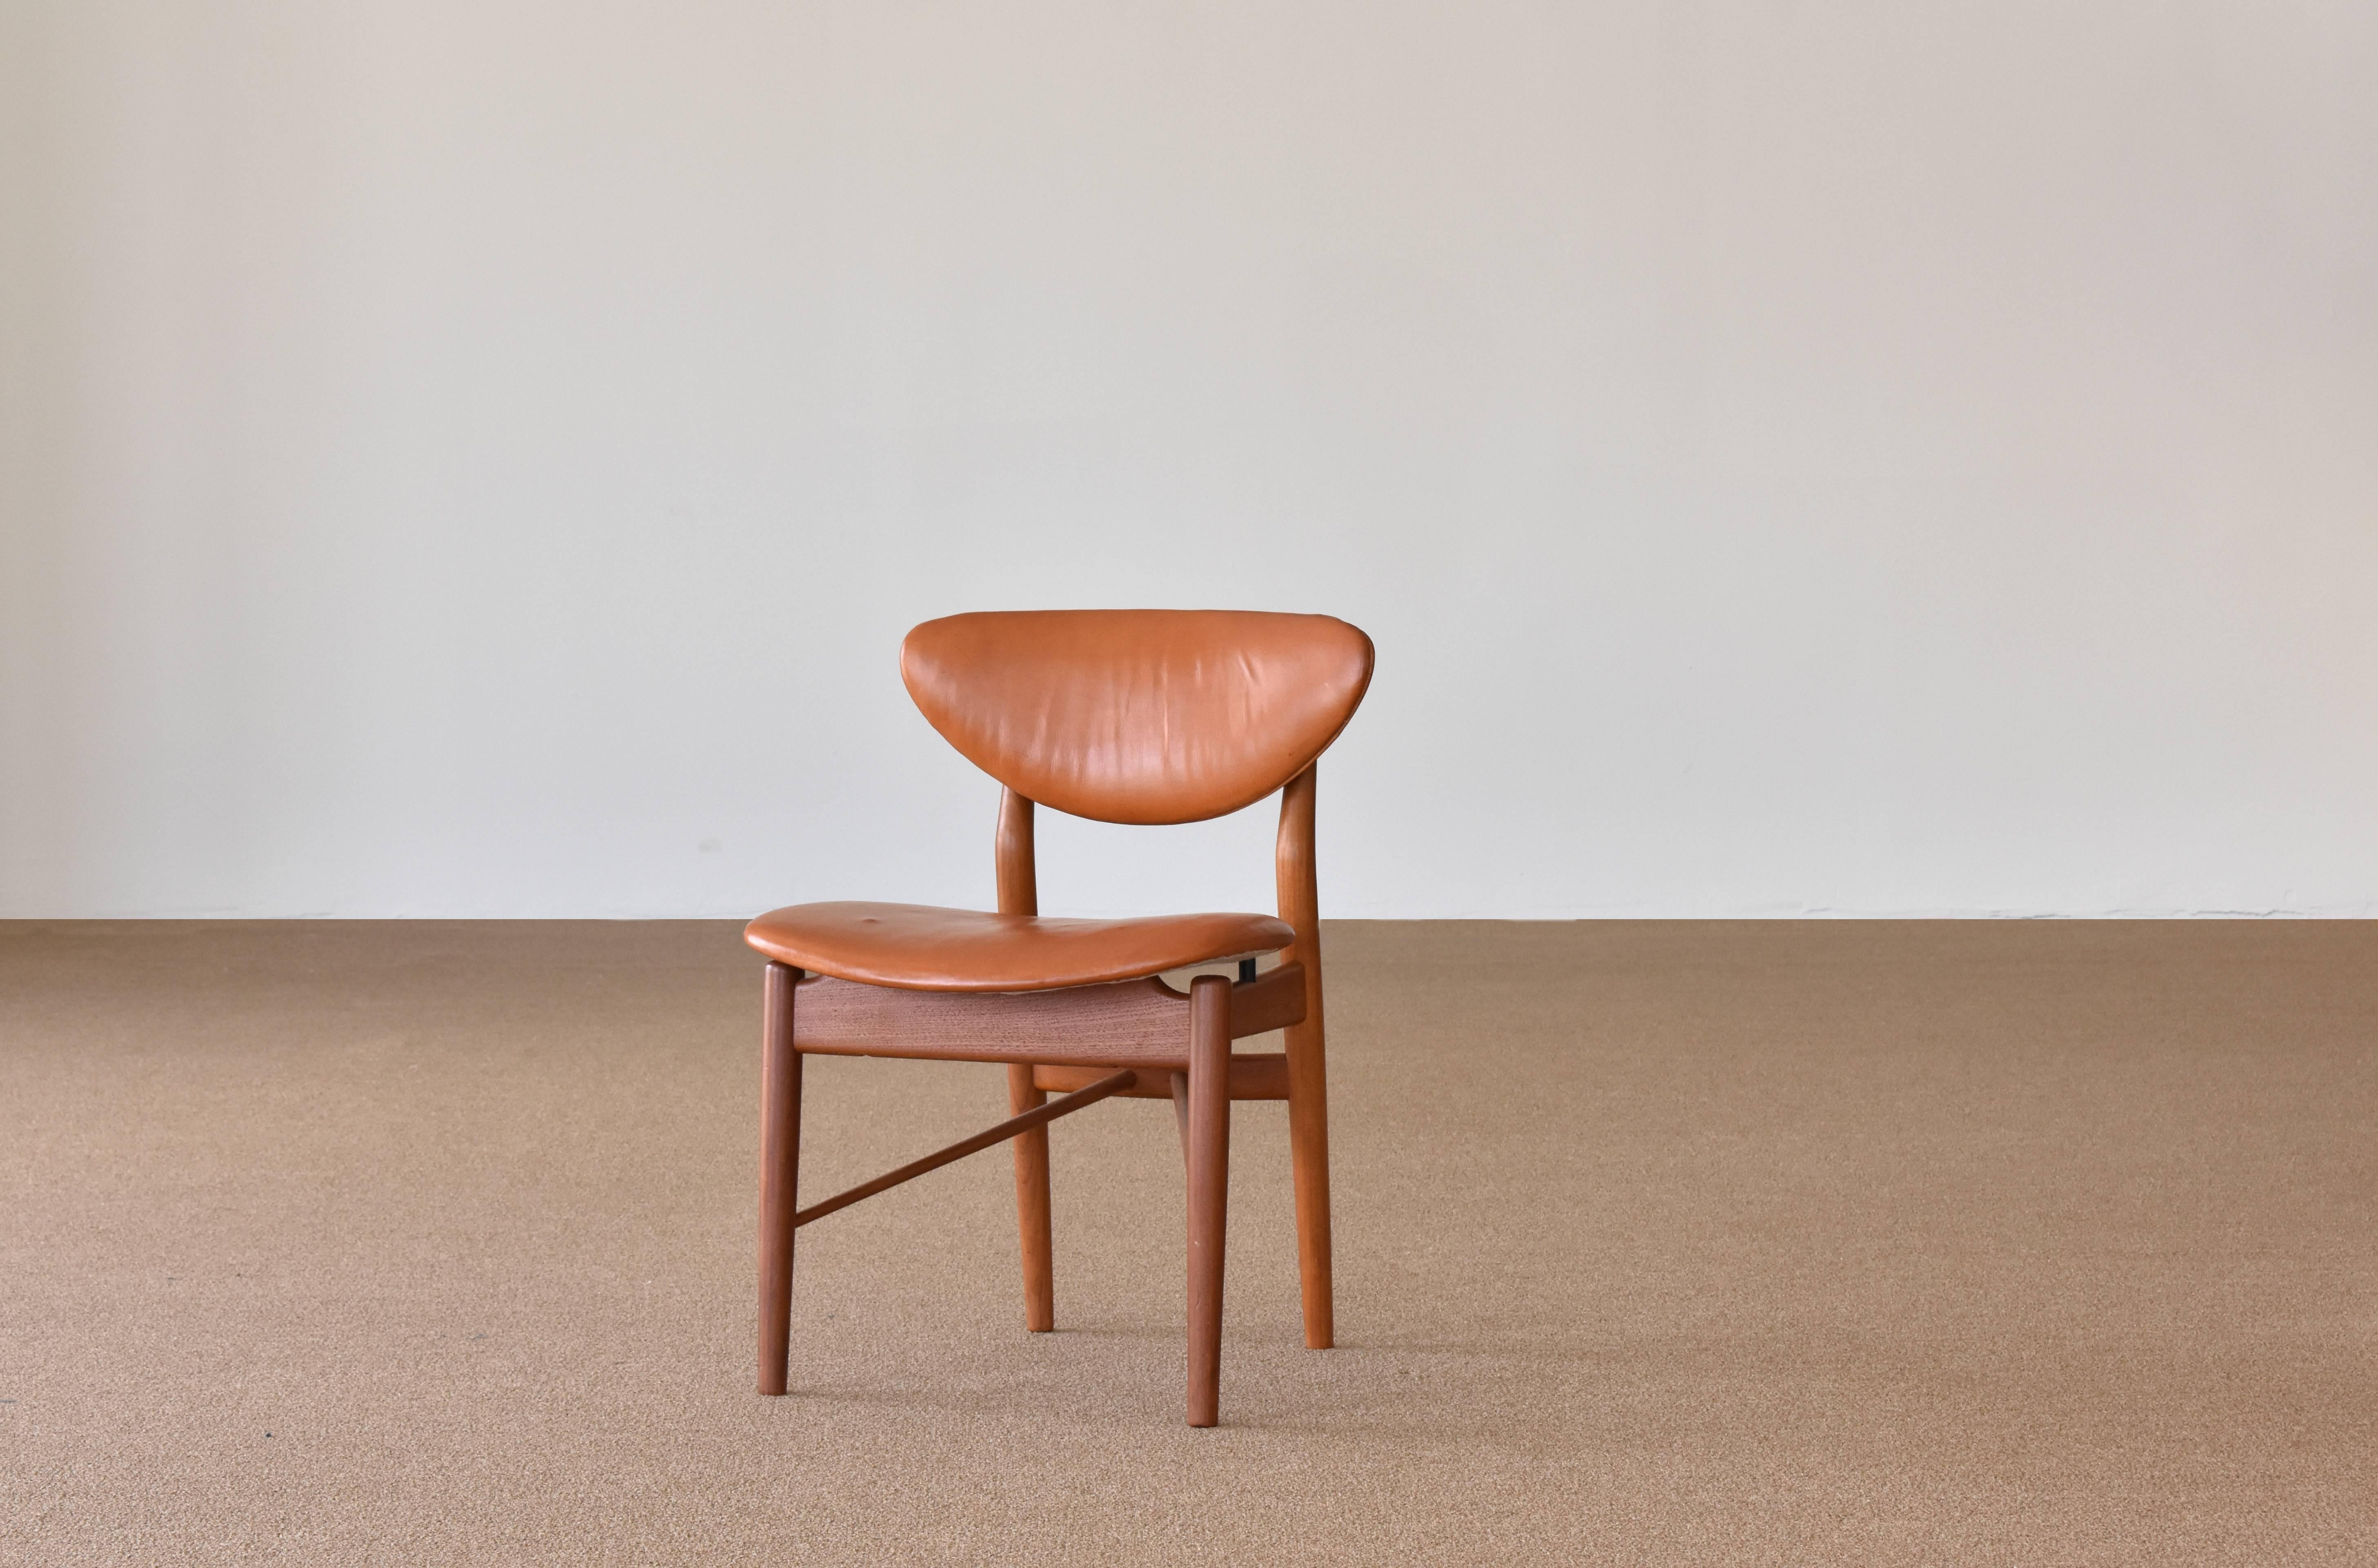 Scandinavian Modern Finn Juhl, 6 NV-55 Dining Chairs, Teak, Brown Leather, Niels Vodder, 1955 Danish